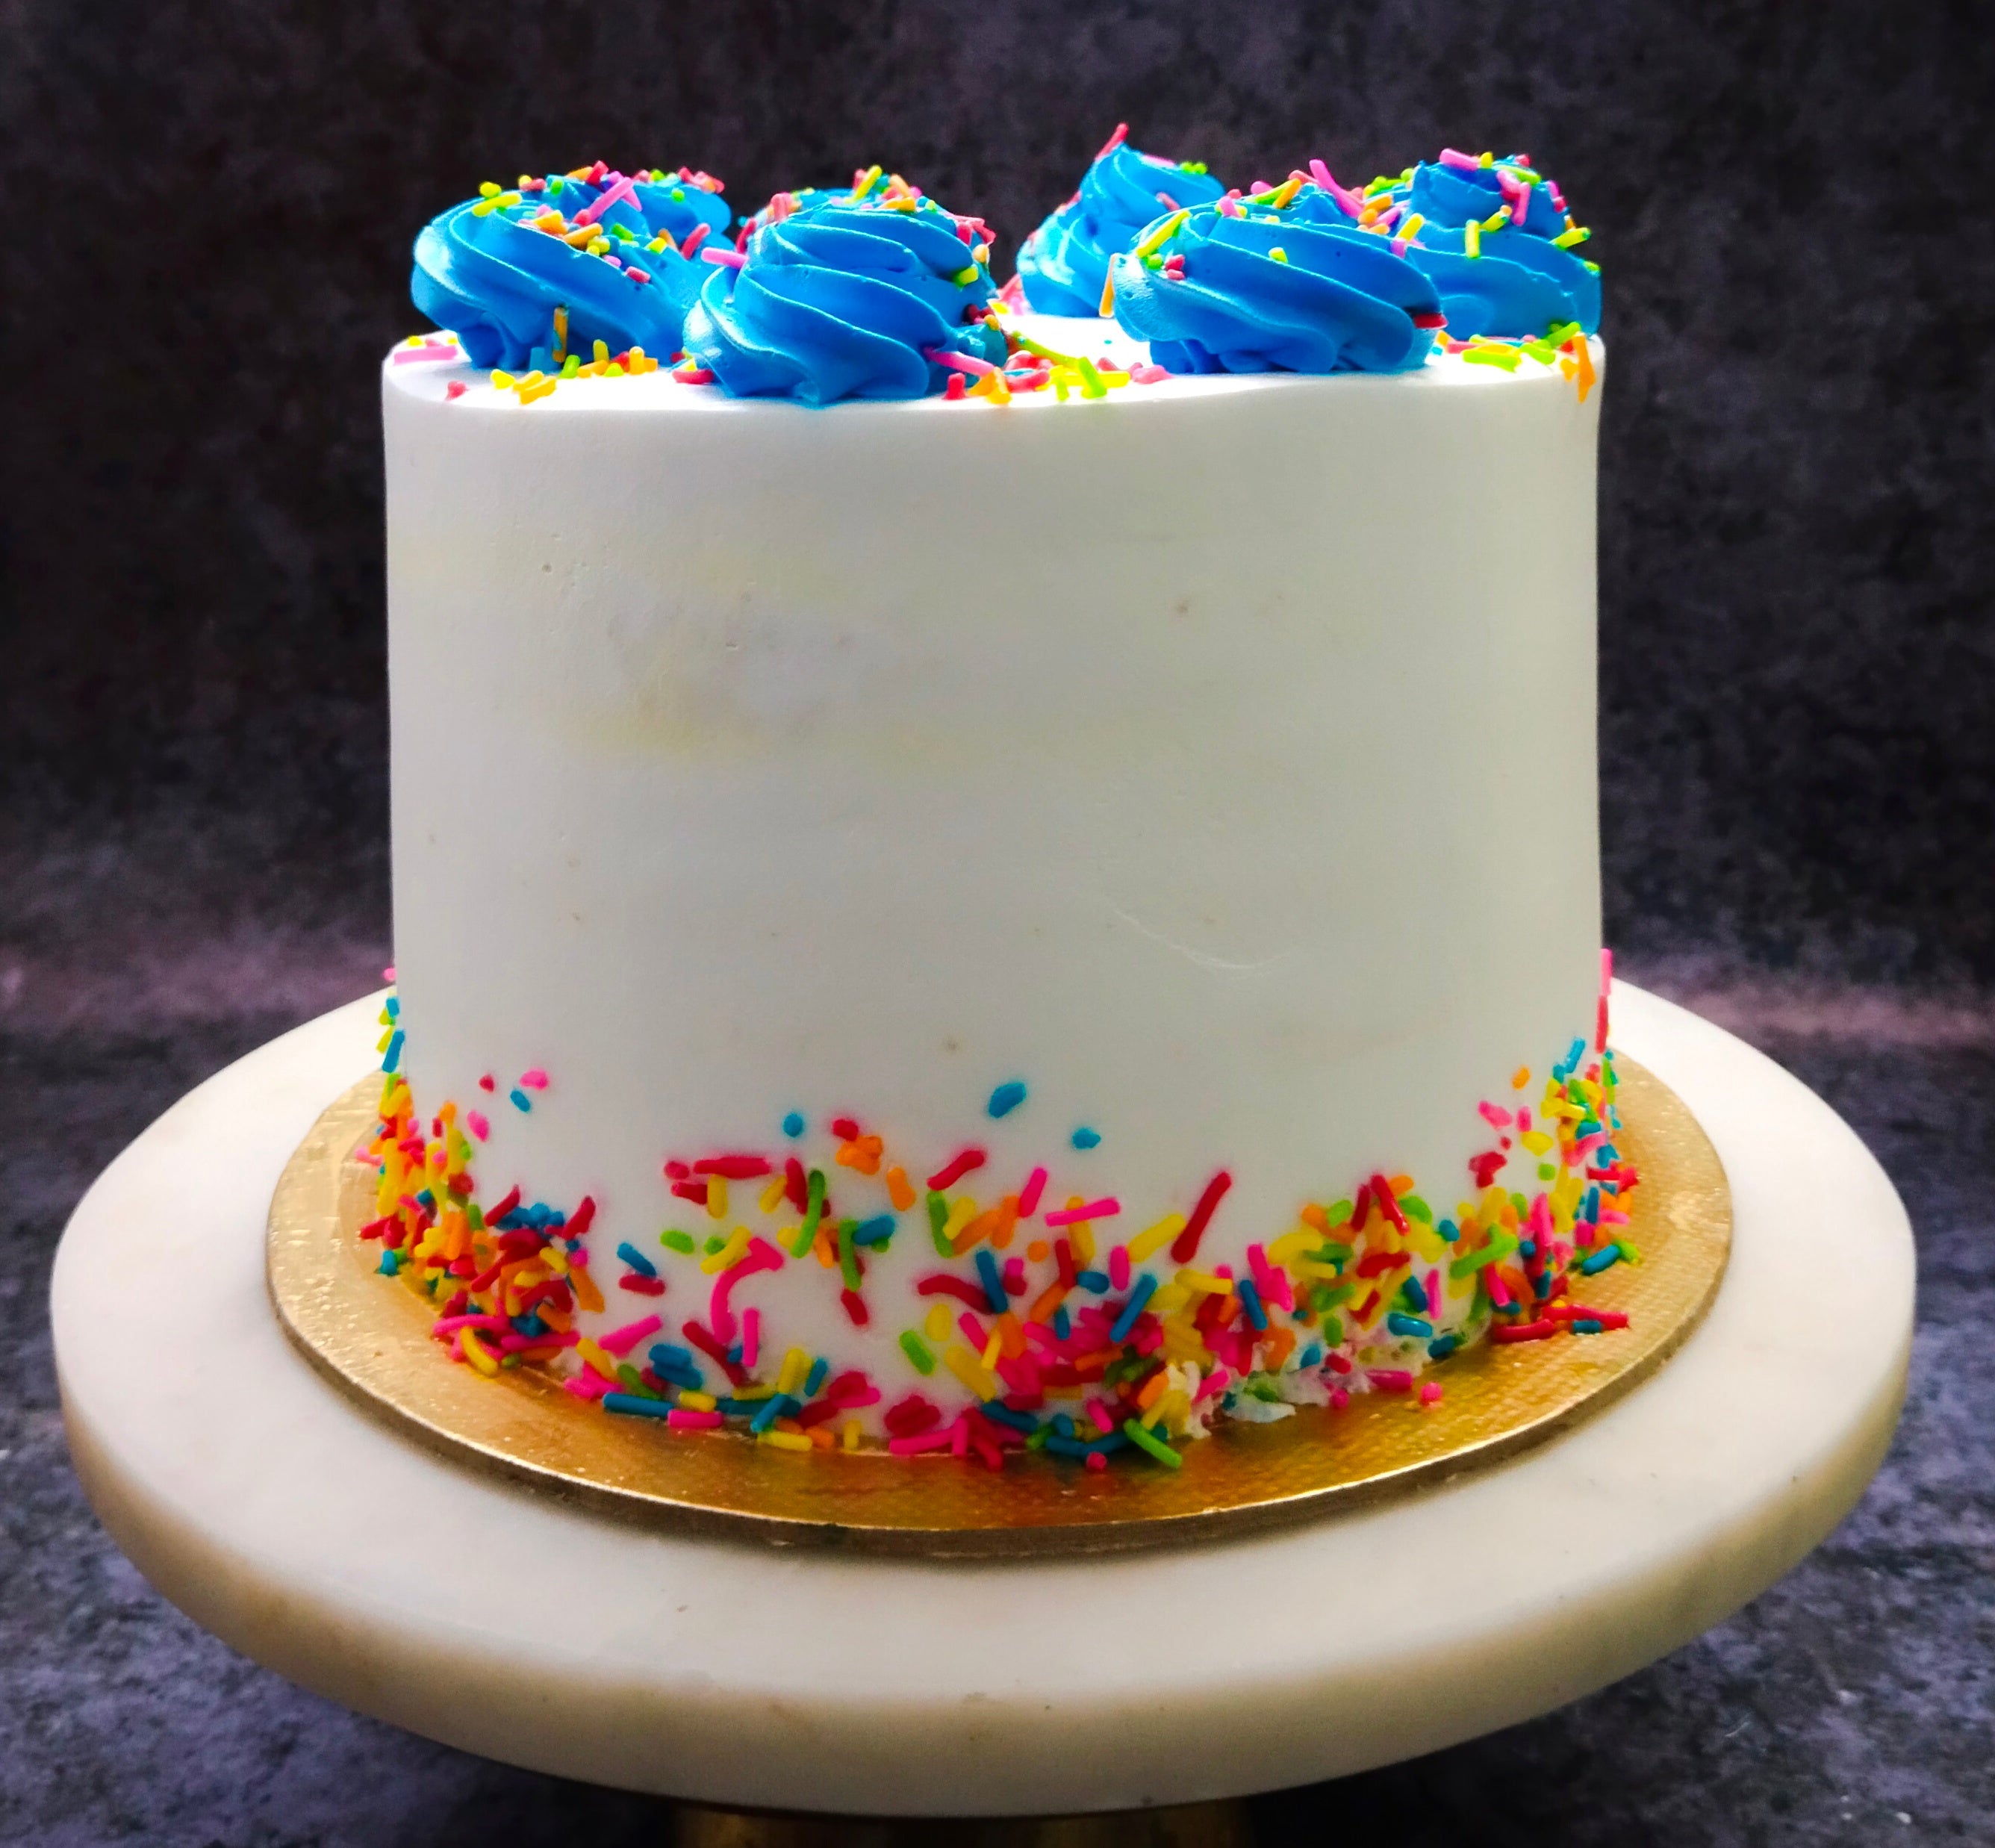 Ultimate Chocolate Birthday Cake - No Bake Dessert Idea